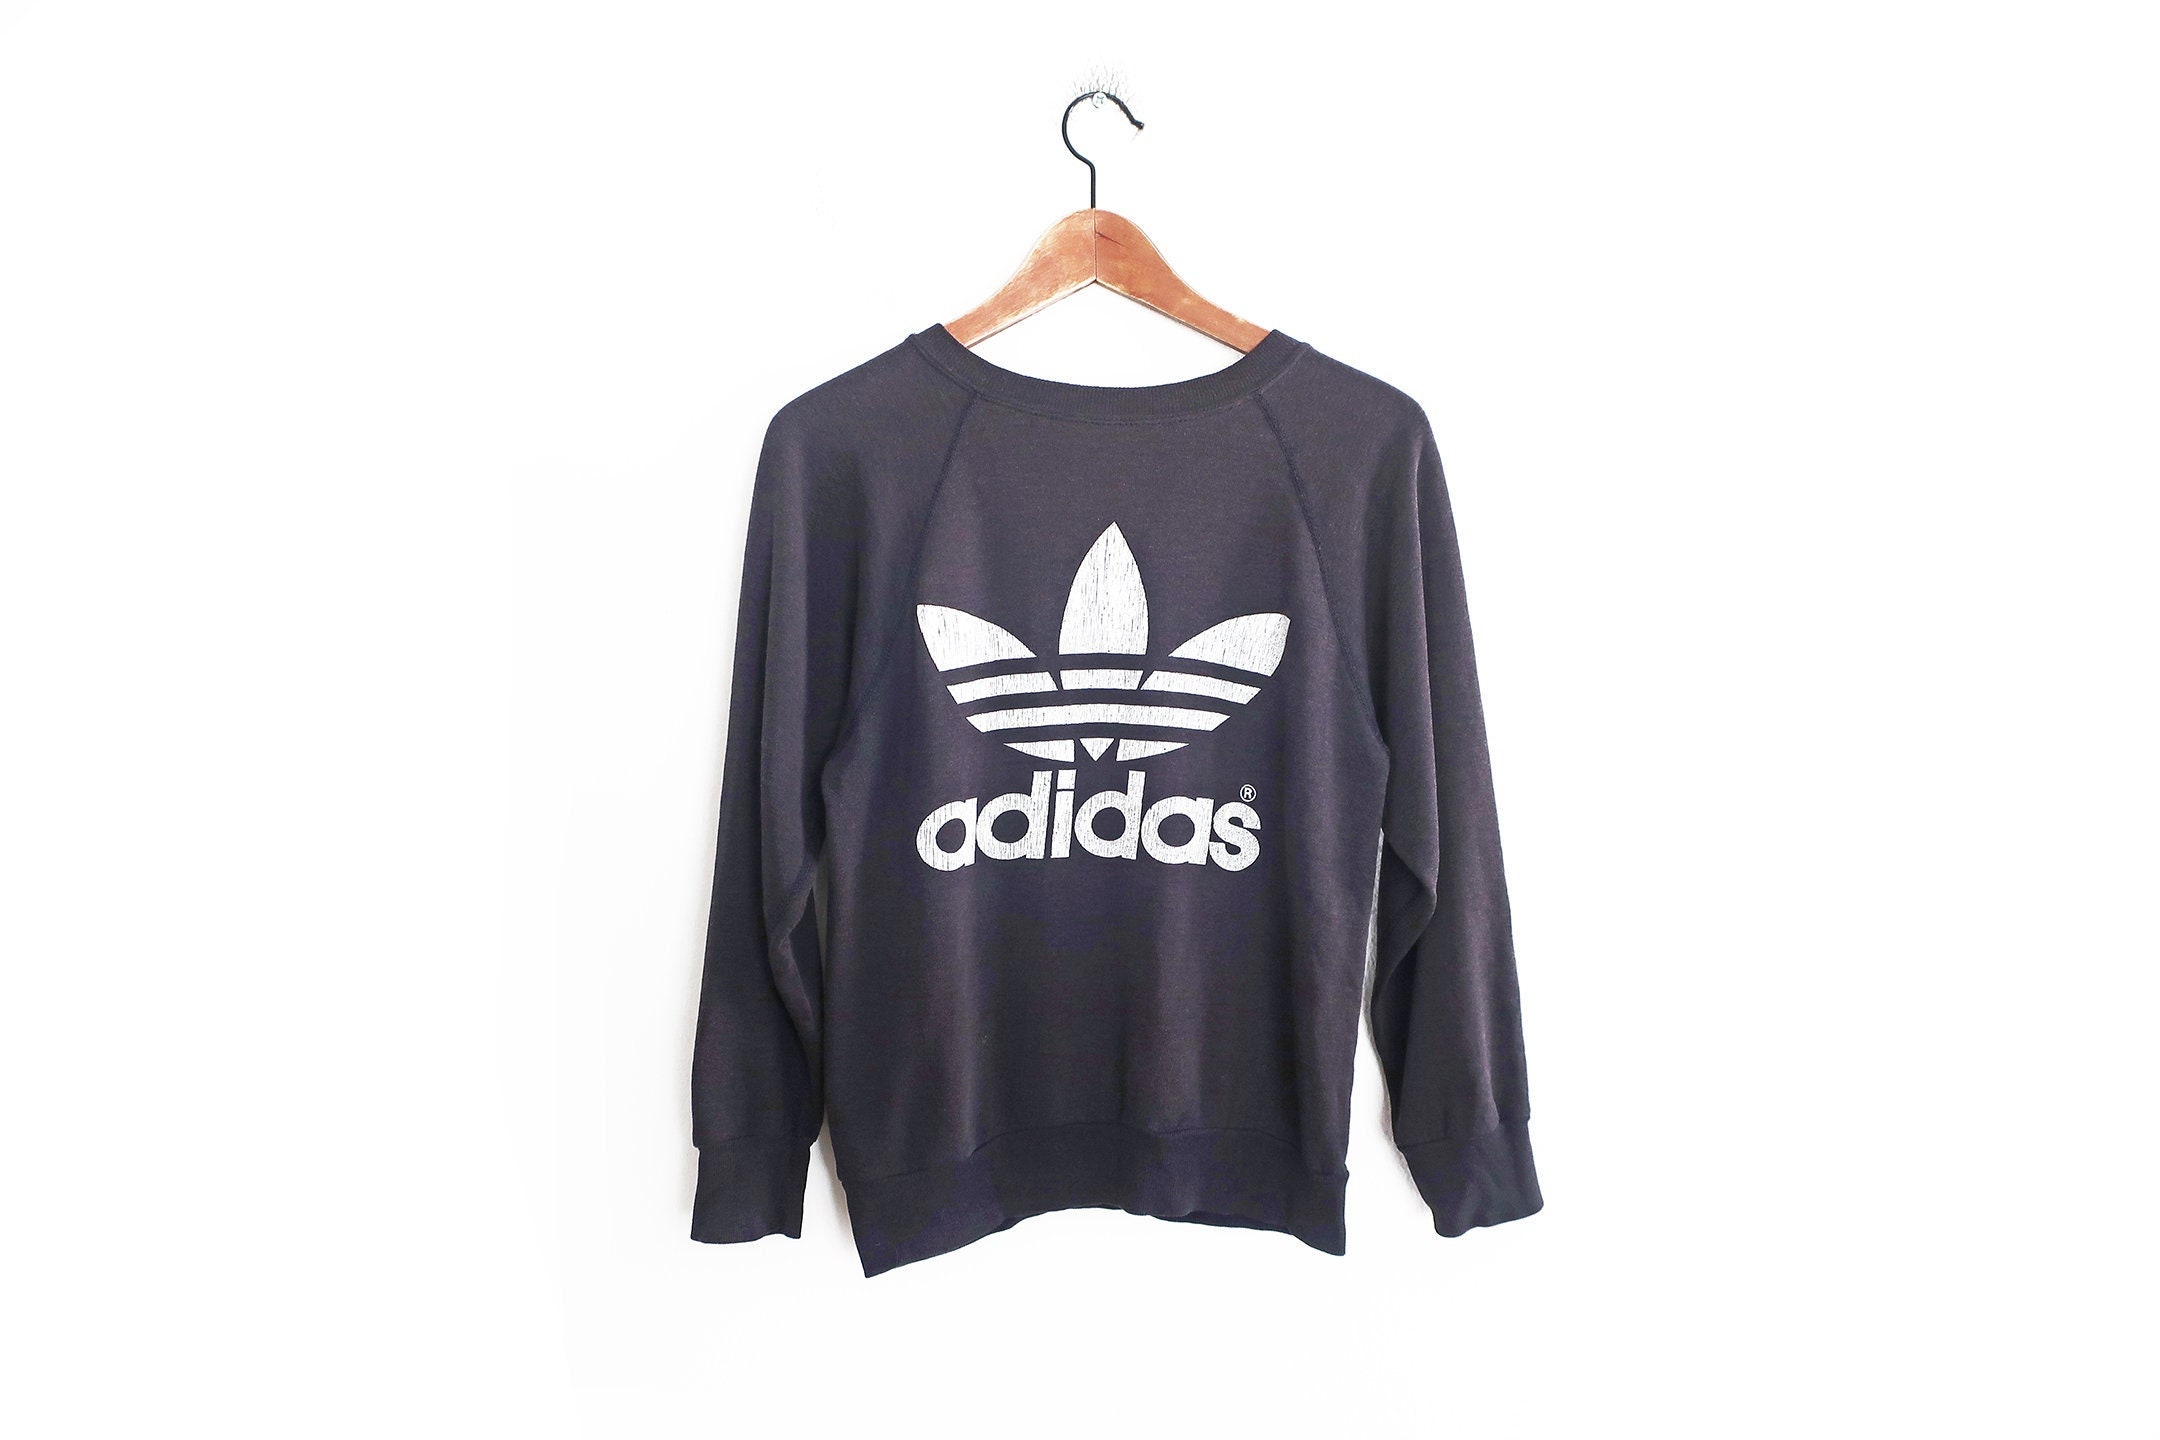 Vintage Adidas Sweatshirt / 80s Sweatshirt / 1980s Faded Black Etsy